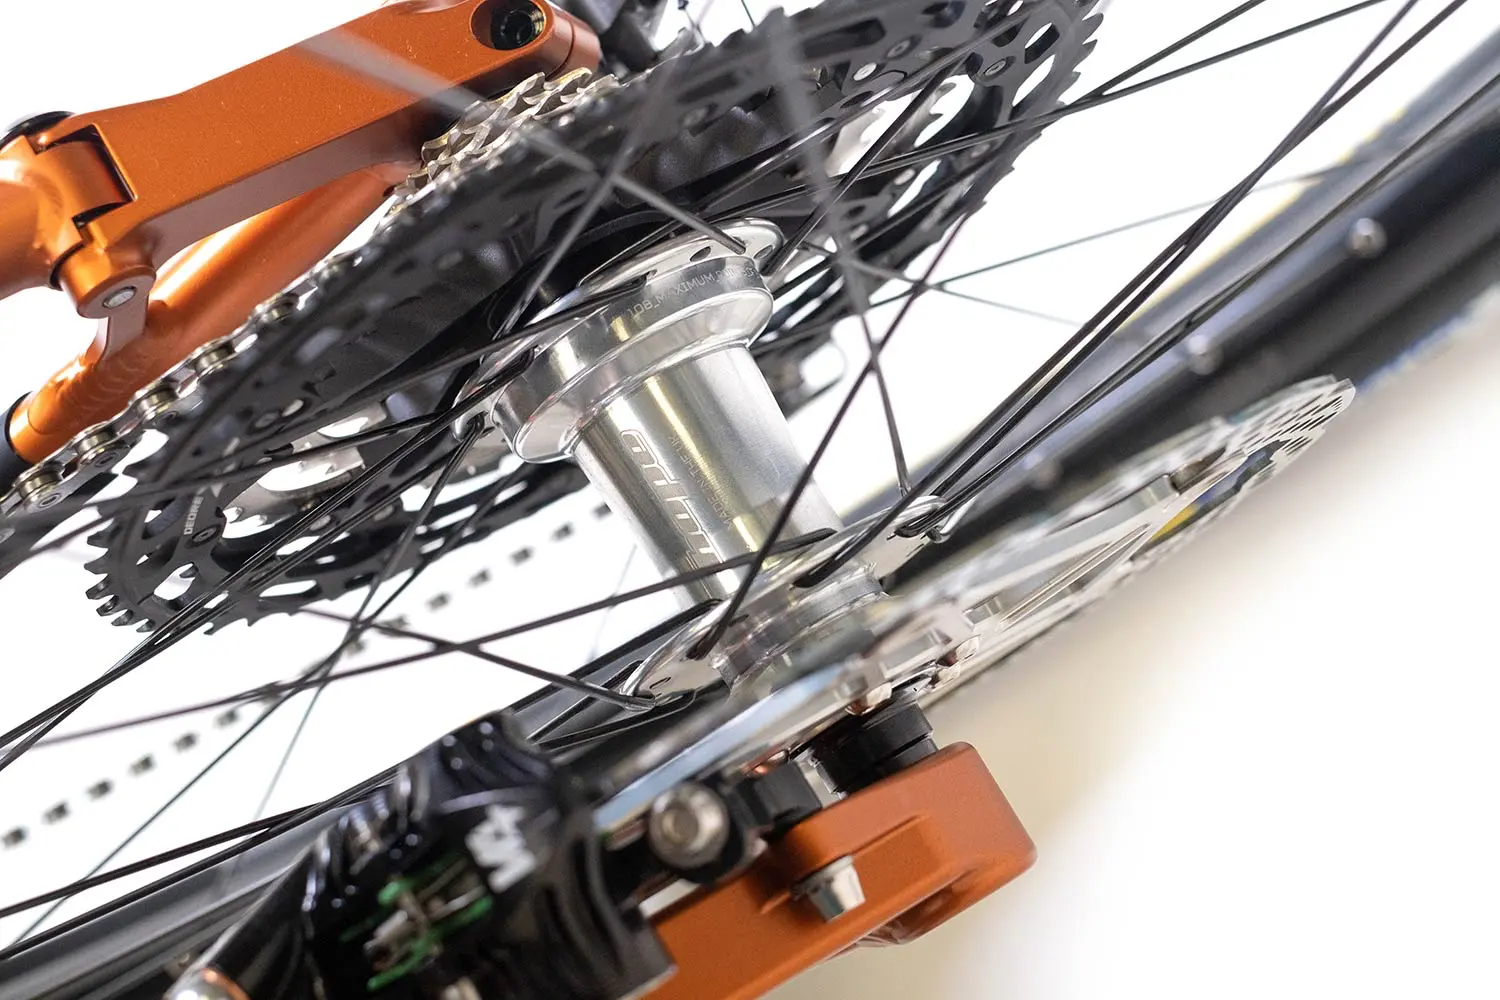 Cotic RocketMAX in Copper Orange, steel full suspension mountain bike, enduro, 29, uk made, british made, 853, longer lower slacker